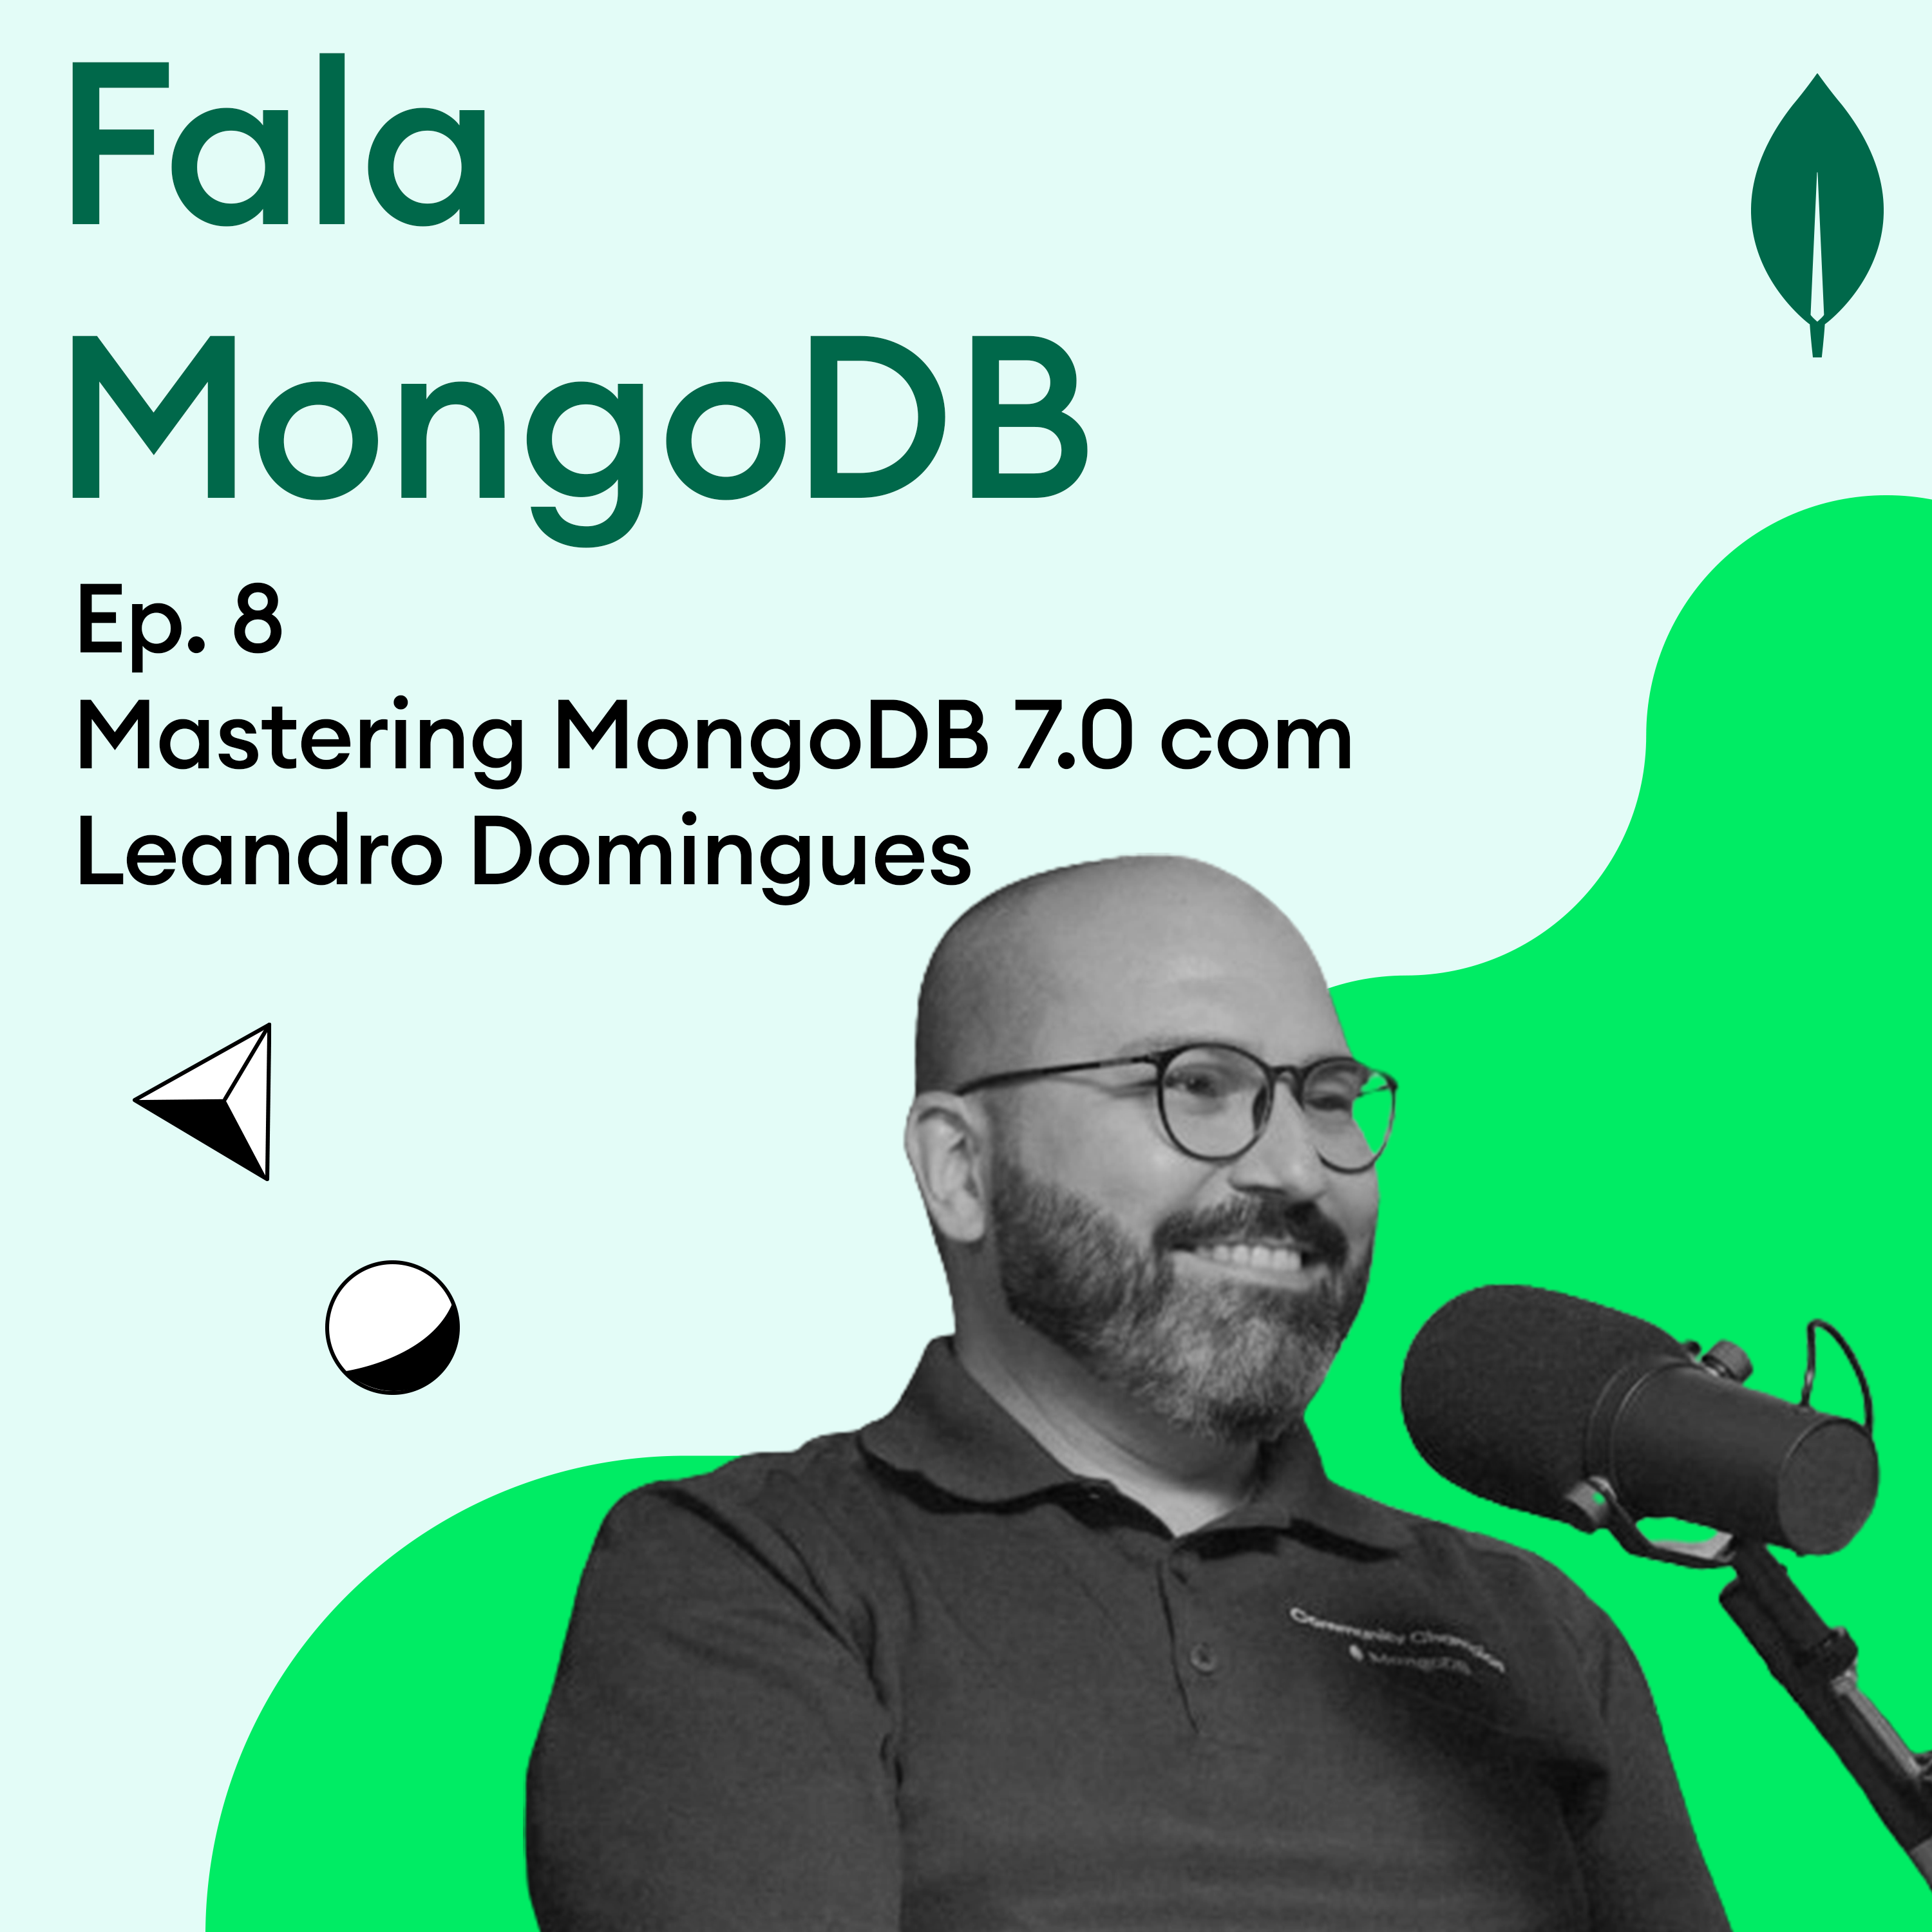 Fala MongoDB Ep. 8 Mastering MongoDB 7.0 com Leandro Domingues